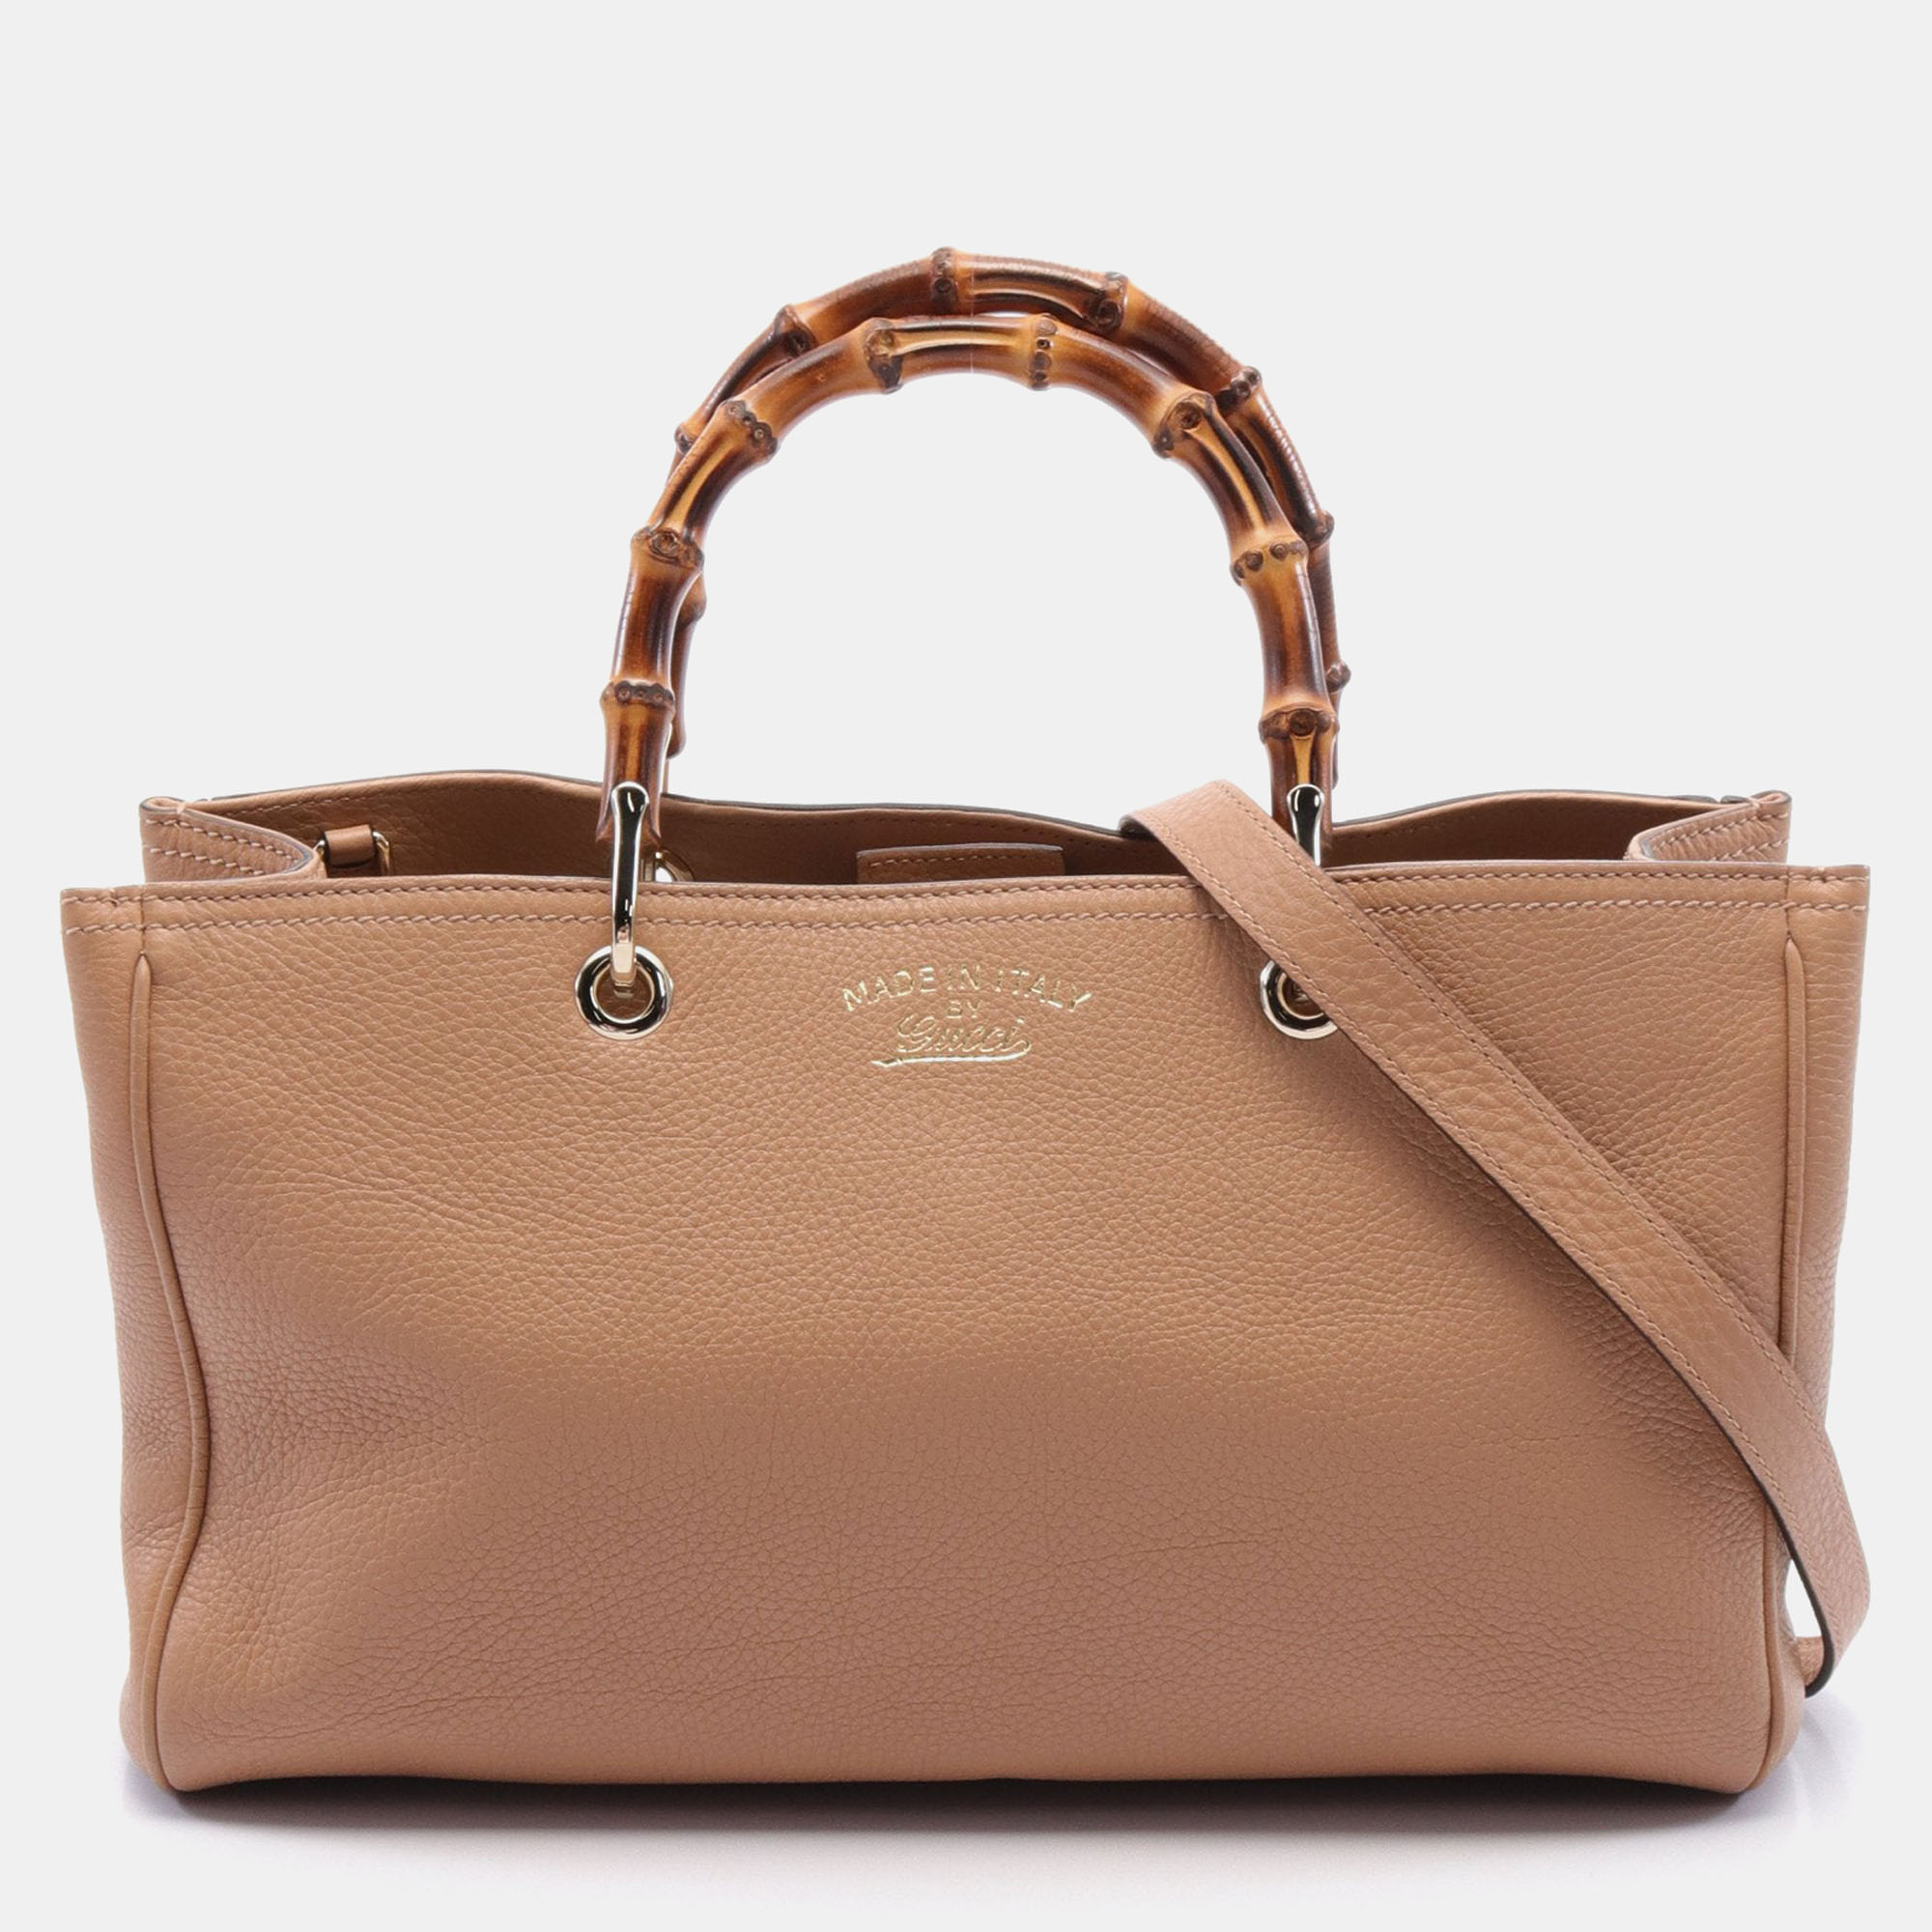 Gucci bamboo shopper medium handbag tote bag leather pink beige 2way